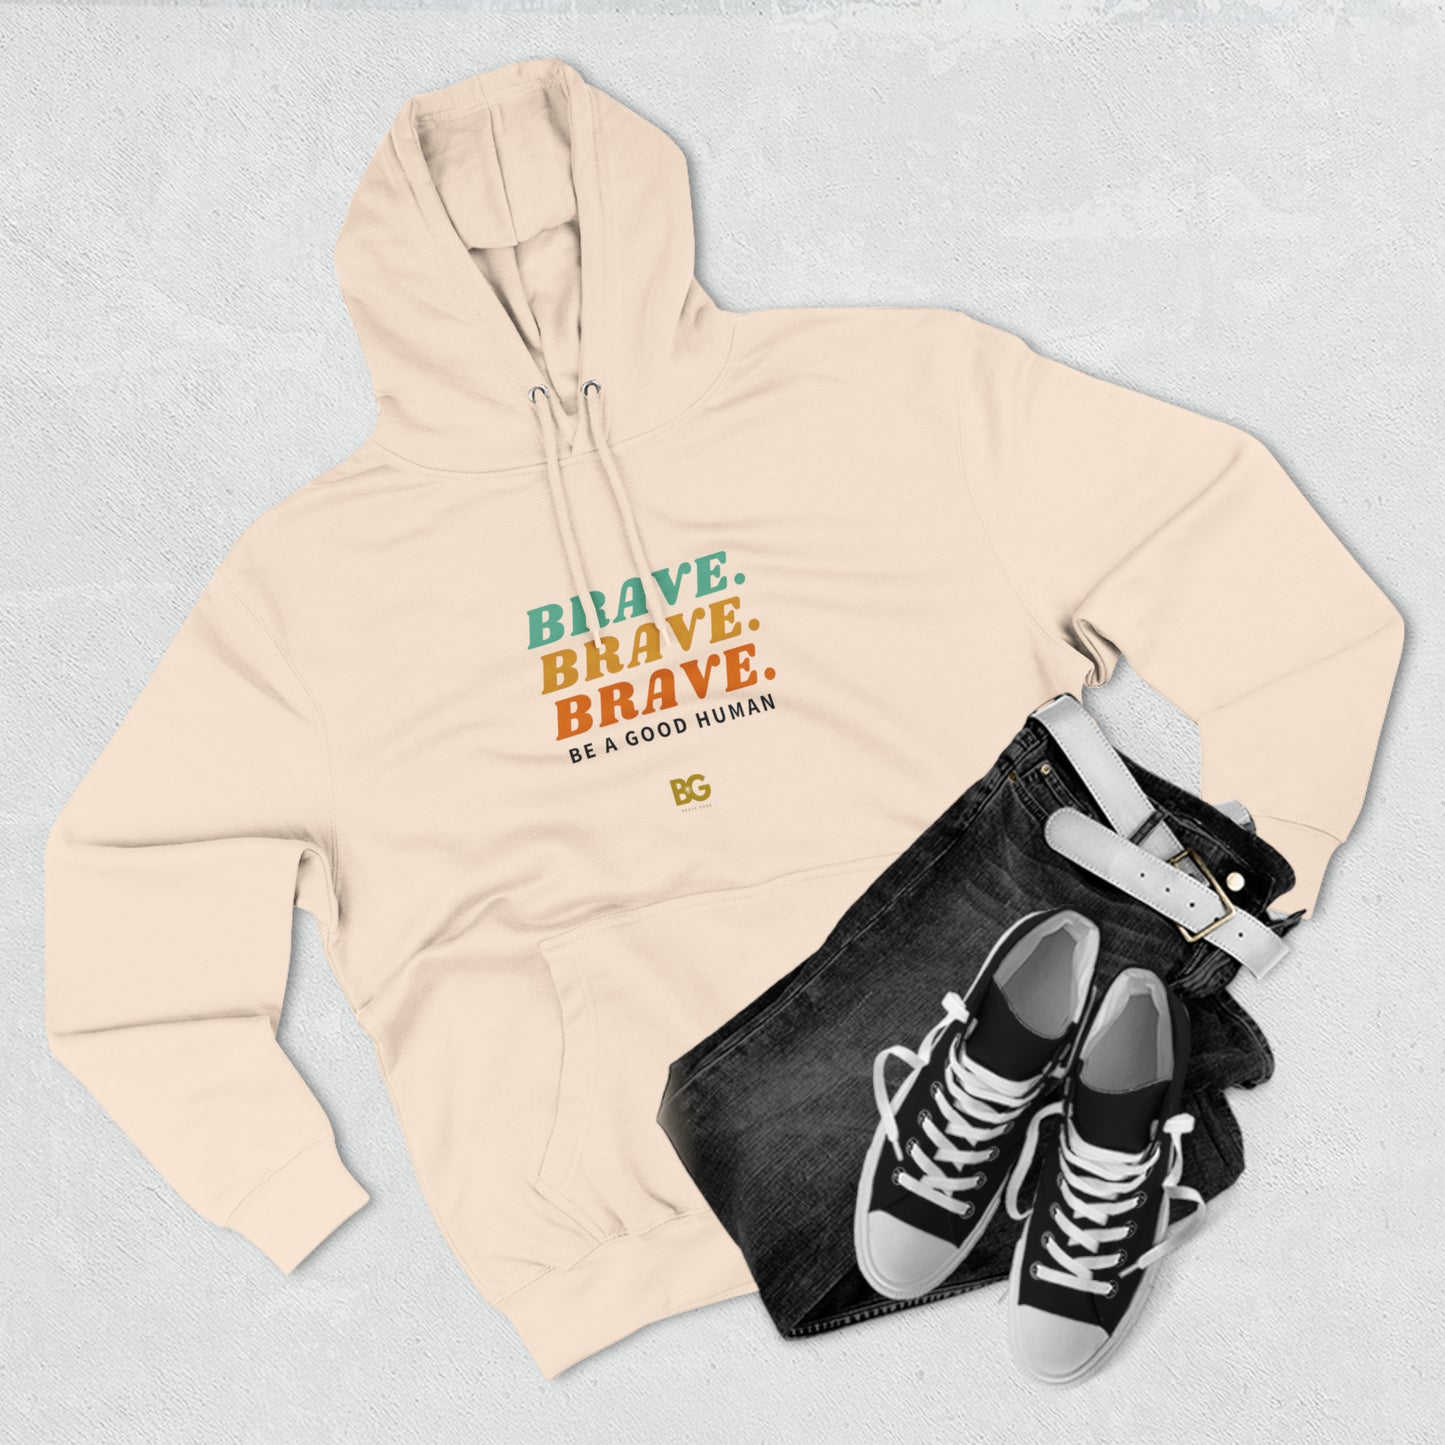 BG "Brave Brave Brave" Premium Pullover Hoodie